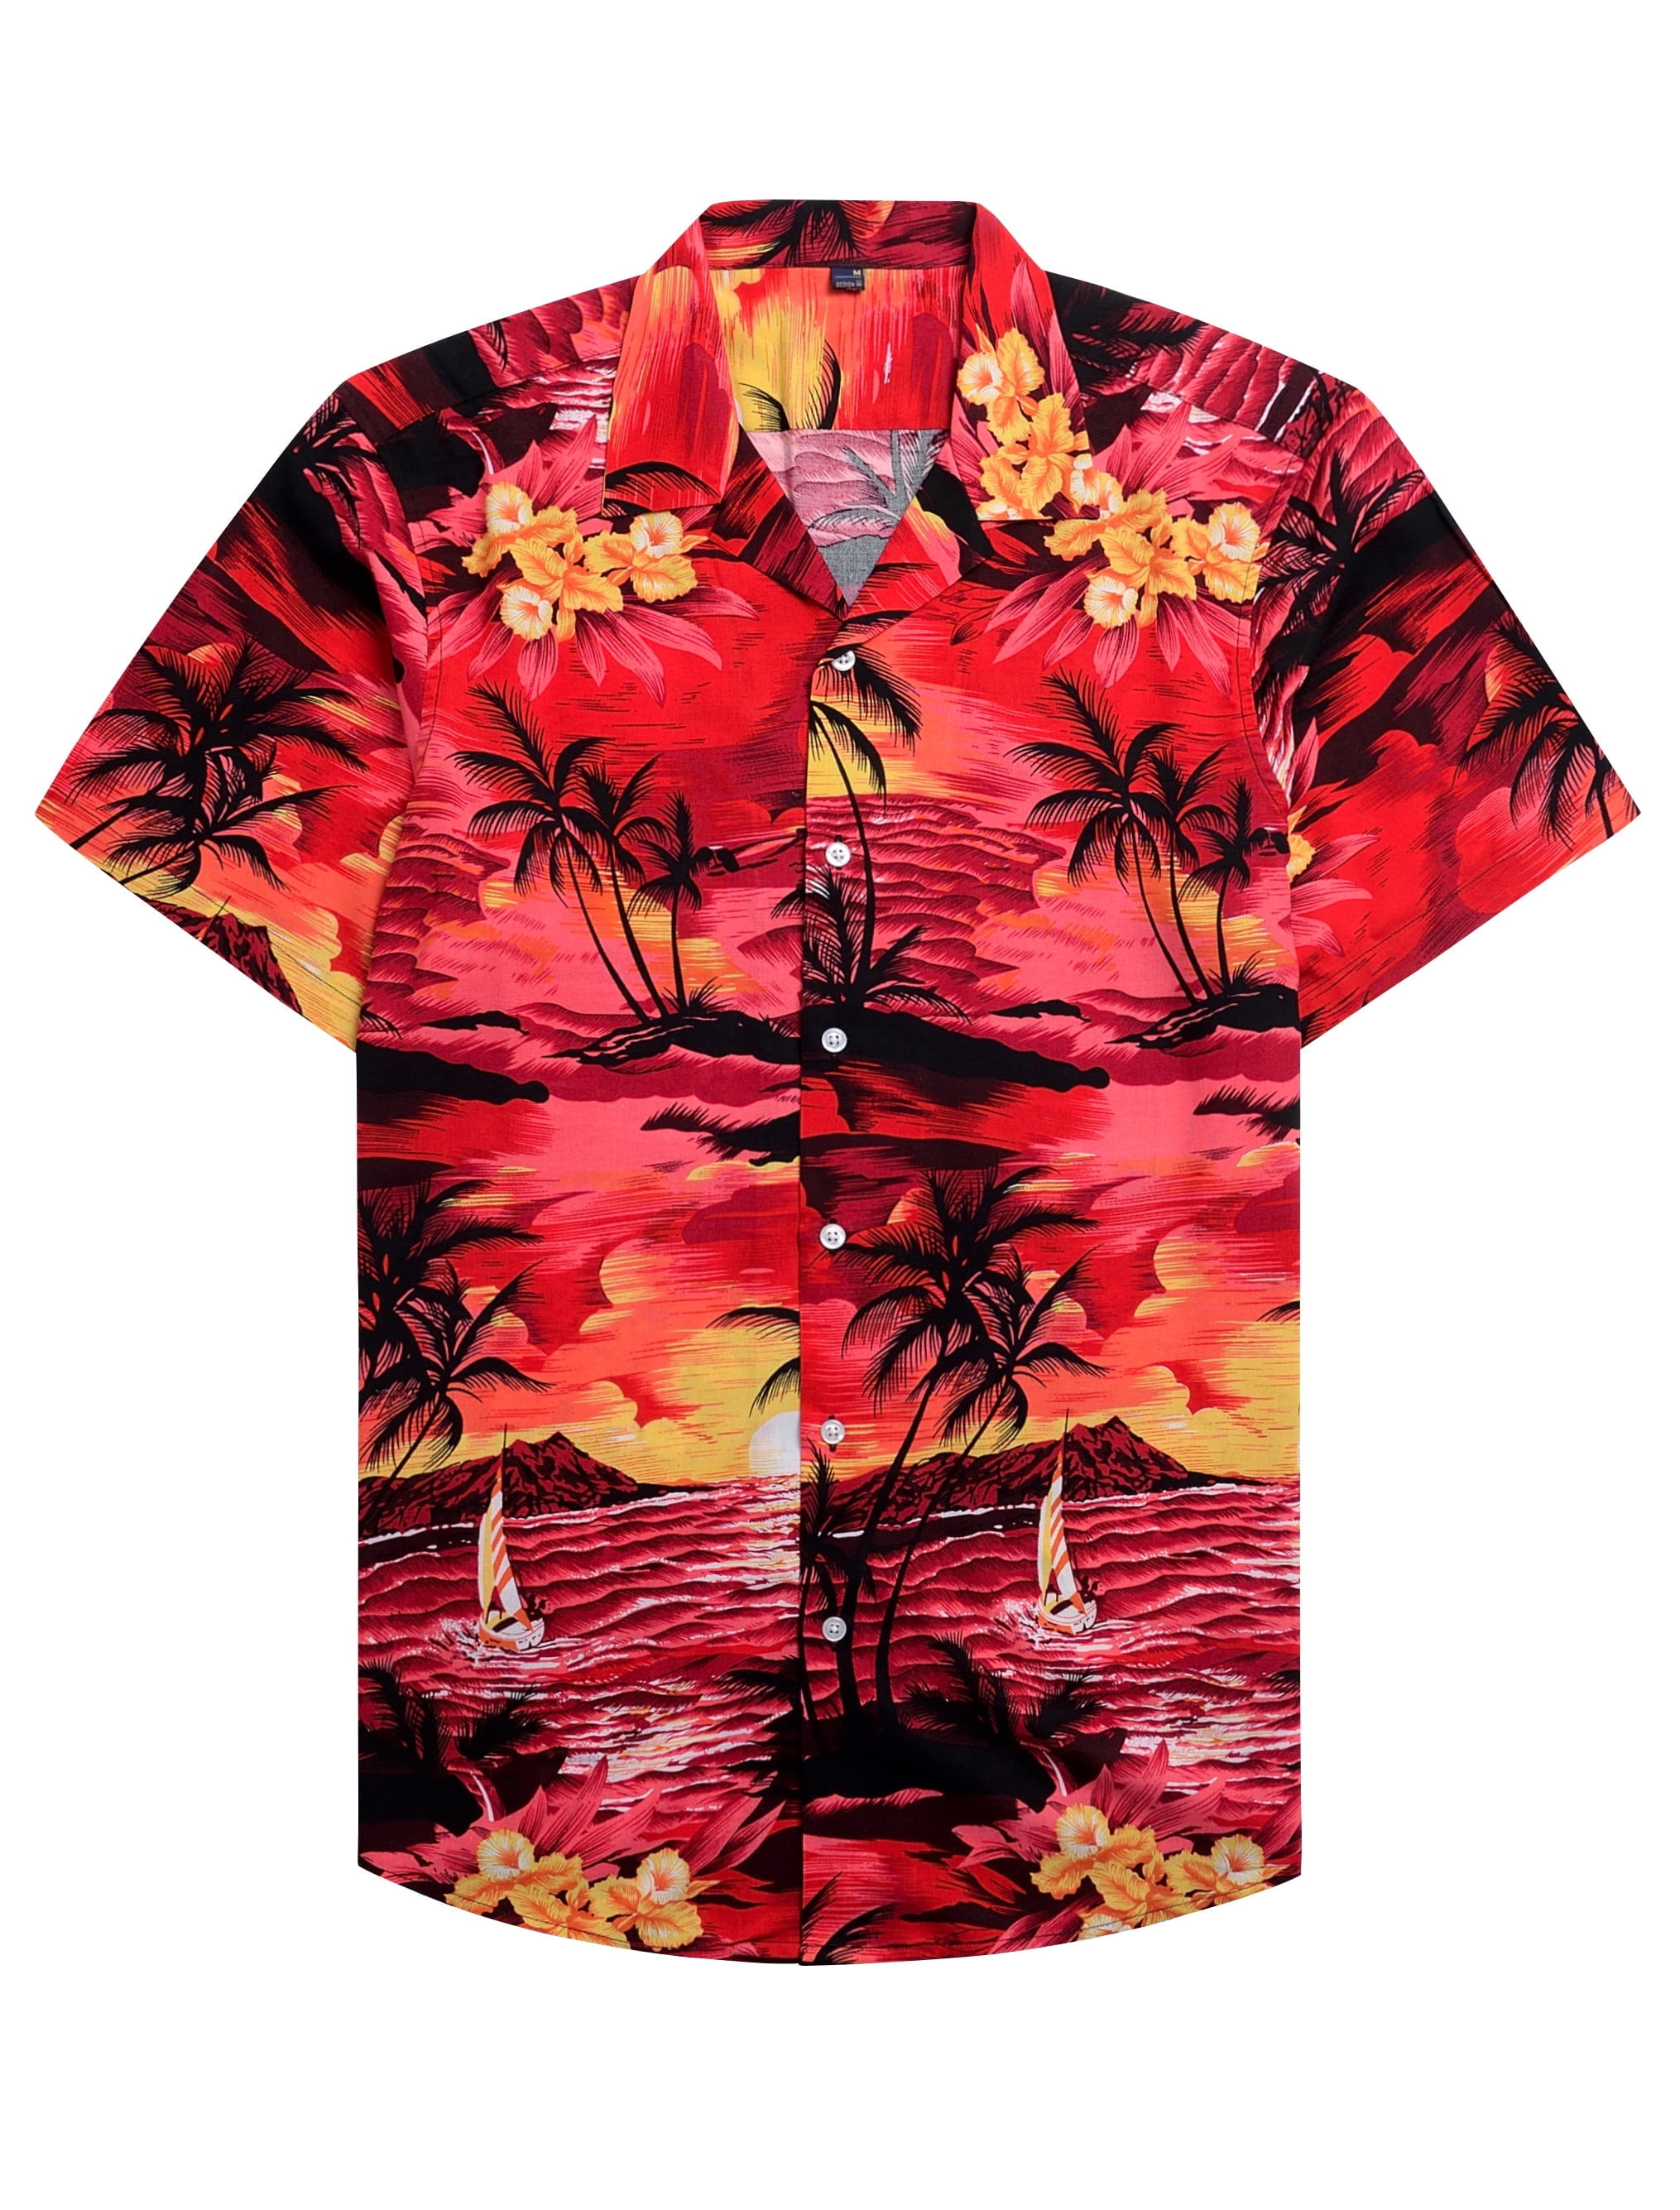 XMMSWDLA Men's Cotton Linen Short Sleeve Shirts Lightweight Casual Button  Down Shirts Summer Beach Spread Collar Tops Black Mens Shirts Casual 